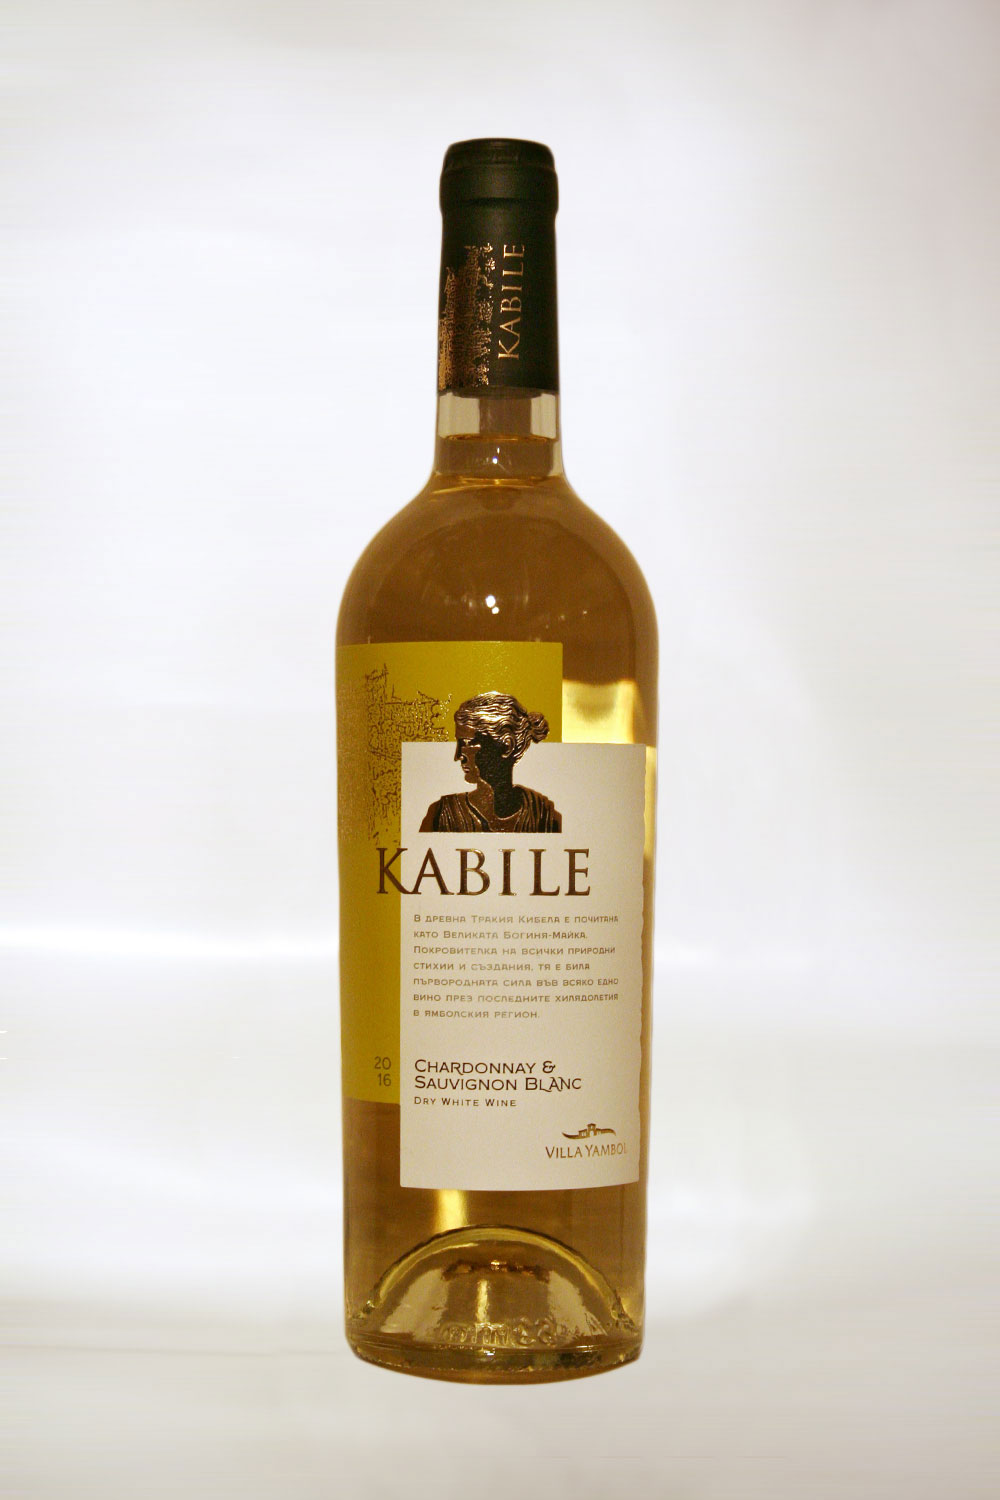 Kabile Chardonnay & Sauvignon blanc 2016